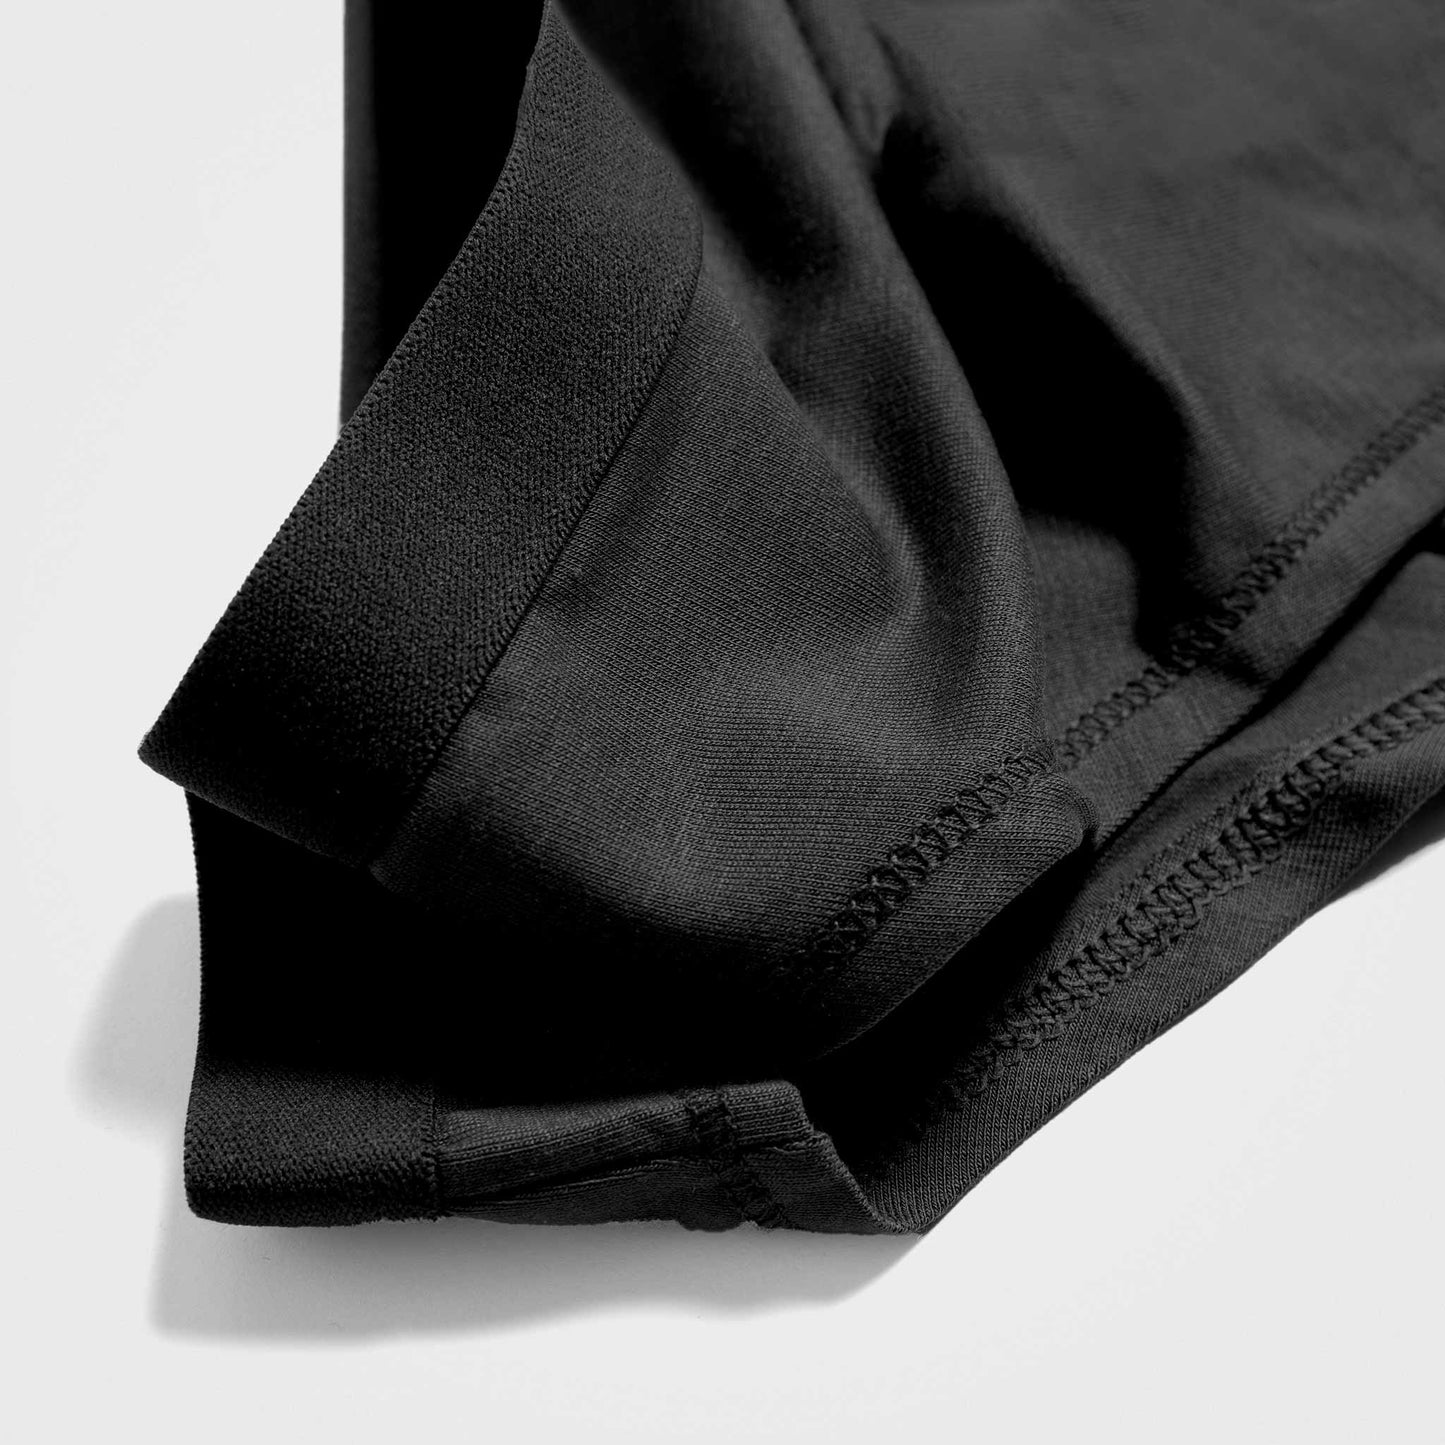 TENCEL™ Lyocell Hipster Underwear for Women I 2-Pack, Black